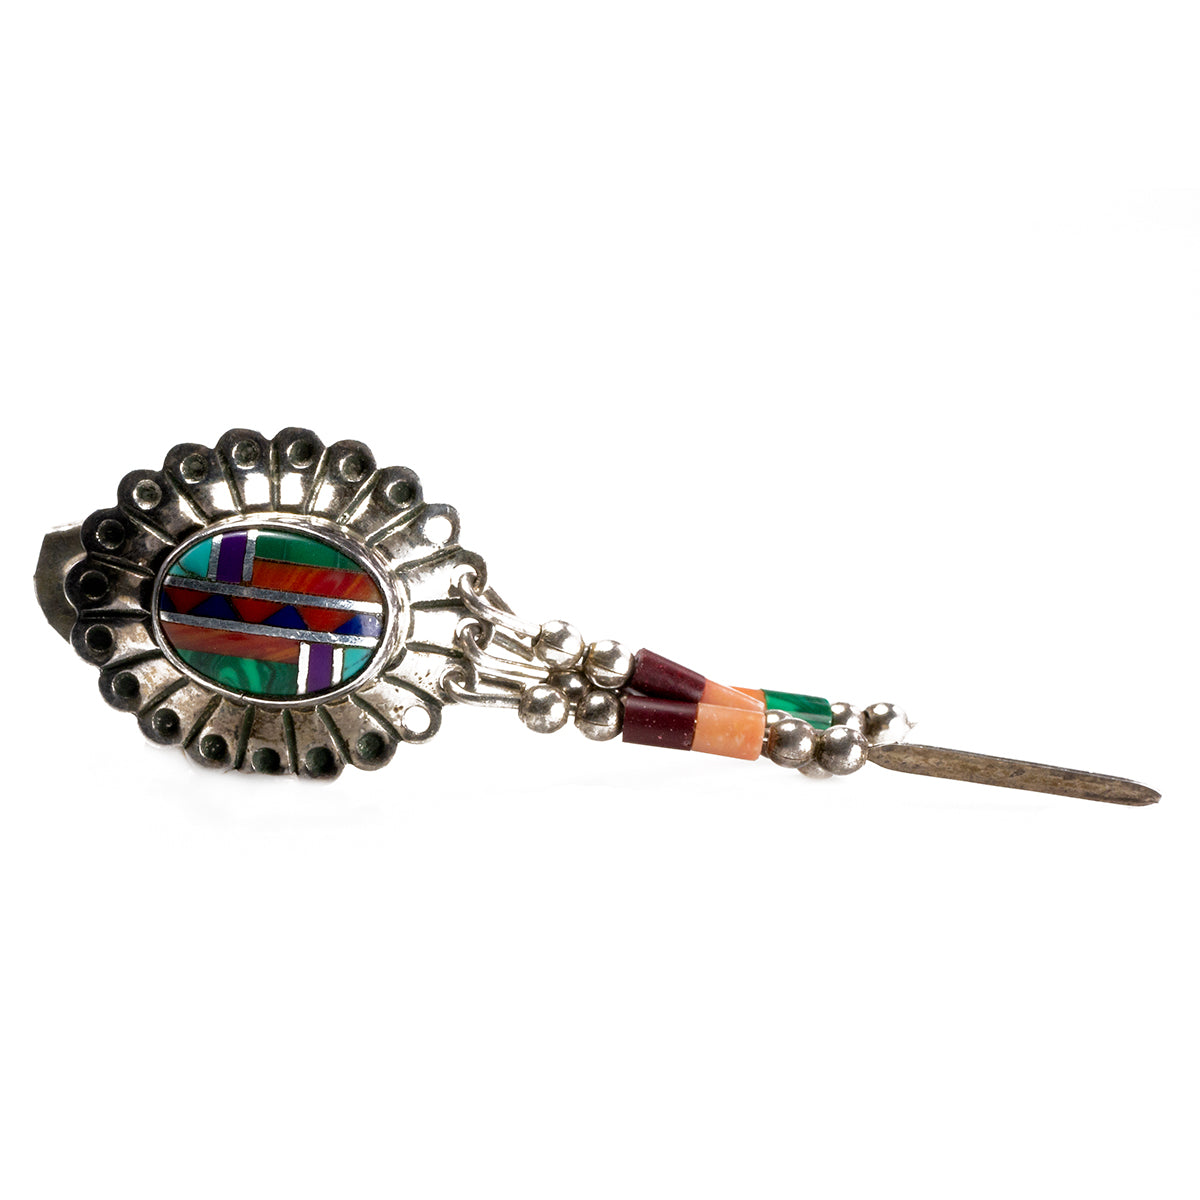 Handmade Silver Native American Mosaic Earrings